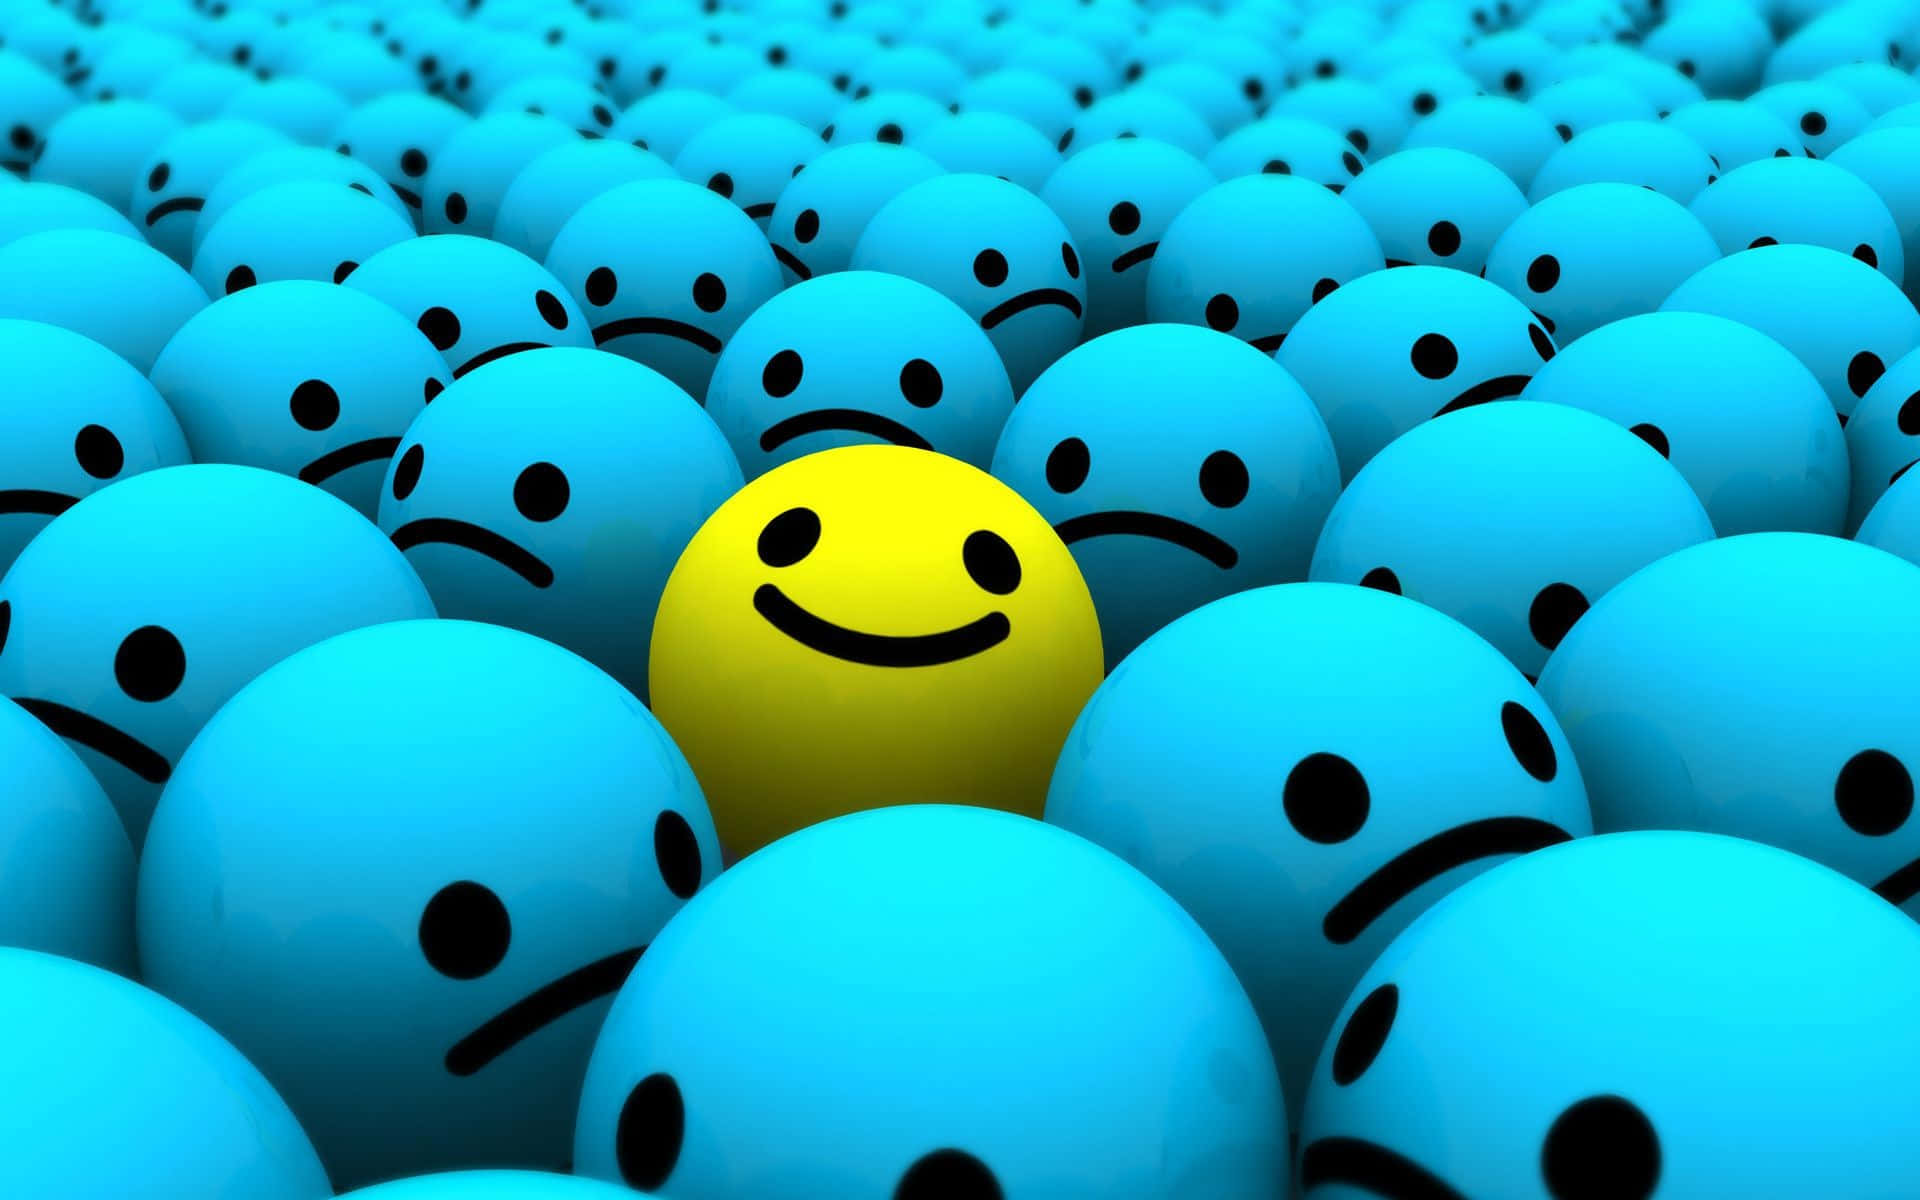 Emanating Joy - The Happy Smile Ball Background